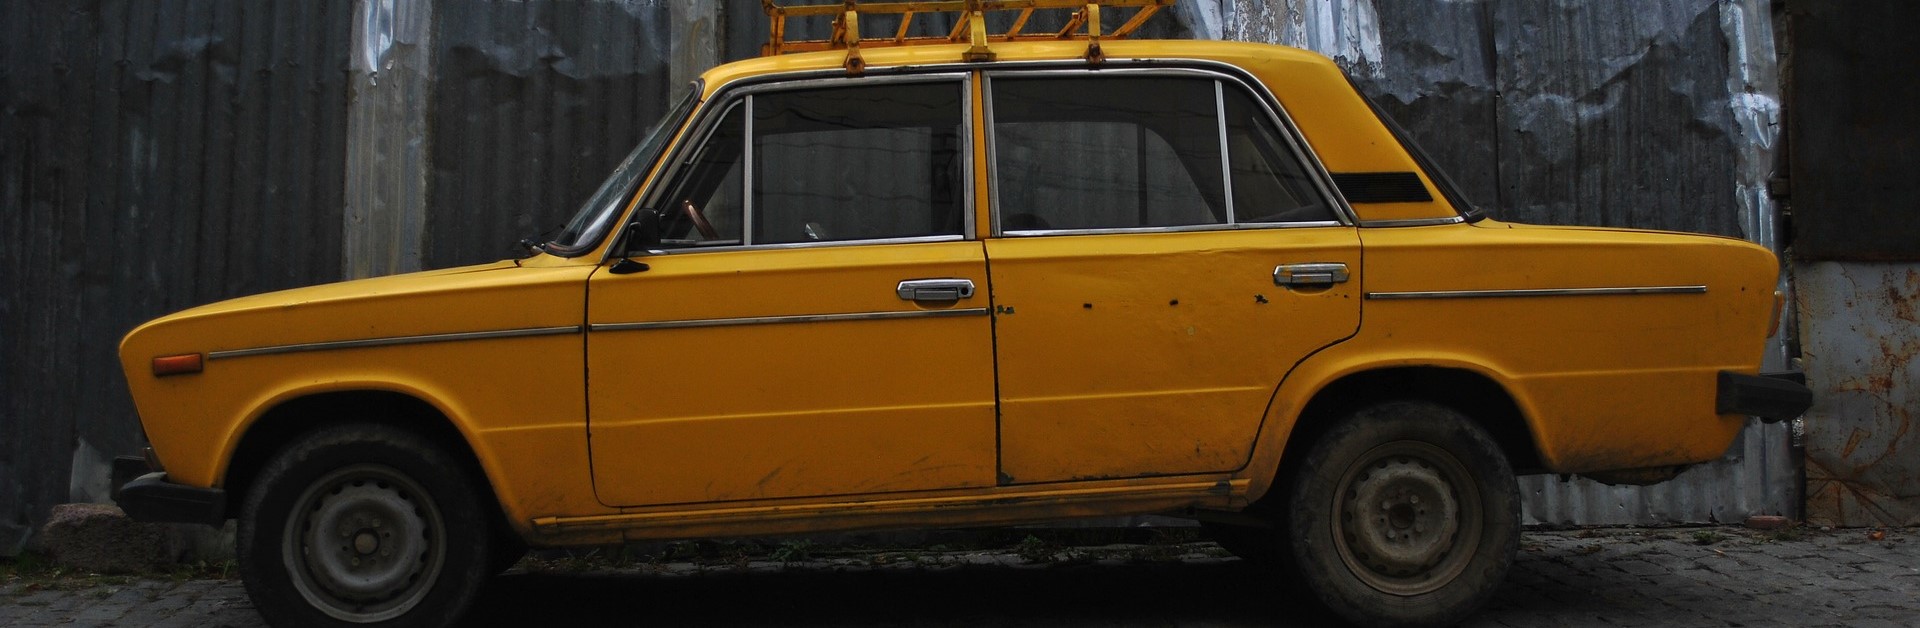 Yellow Oldtimer Car in Savannah, Georgia | Breast Cancer Car Donations